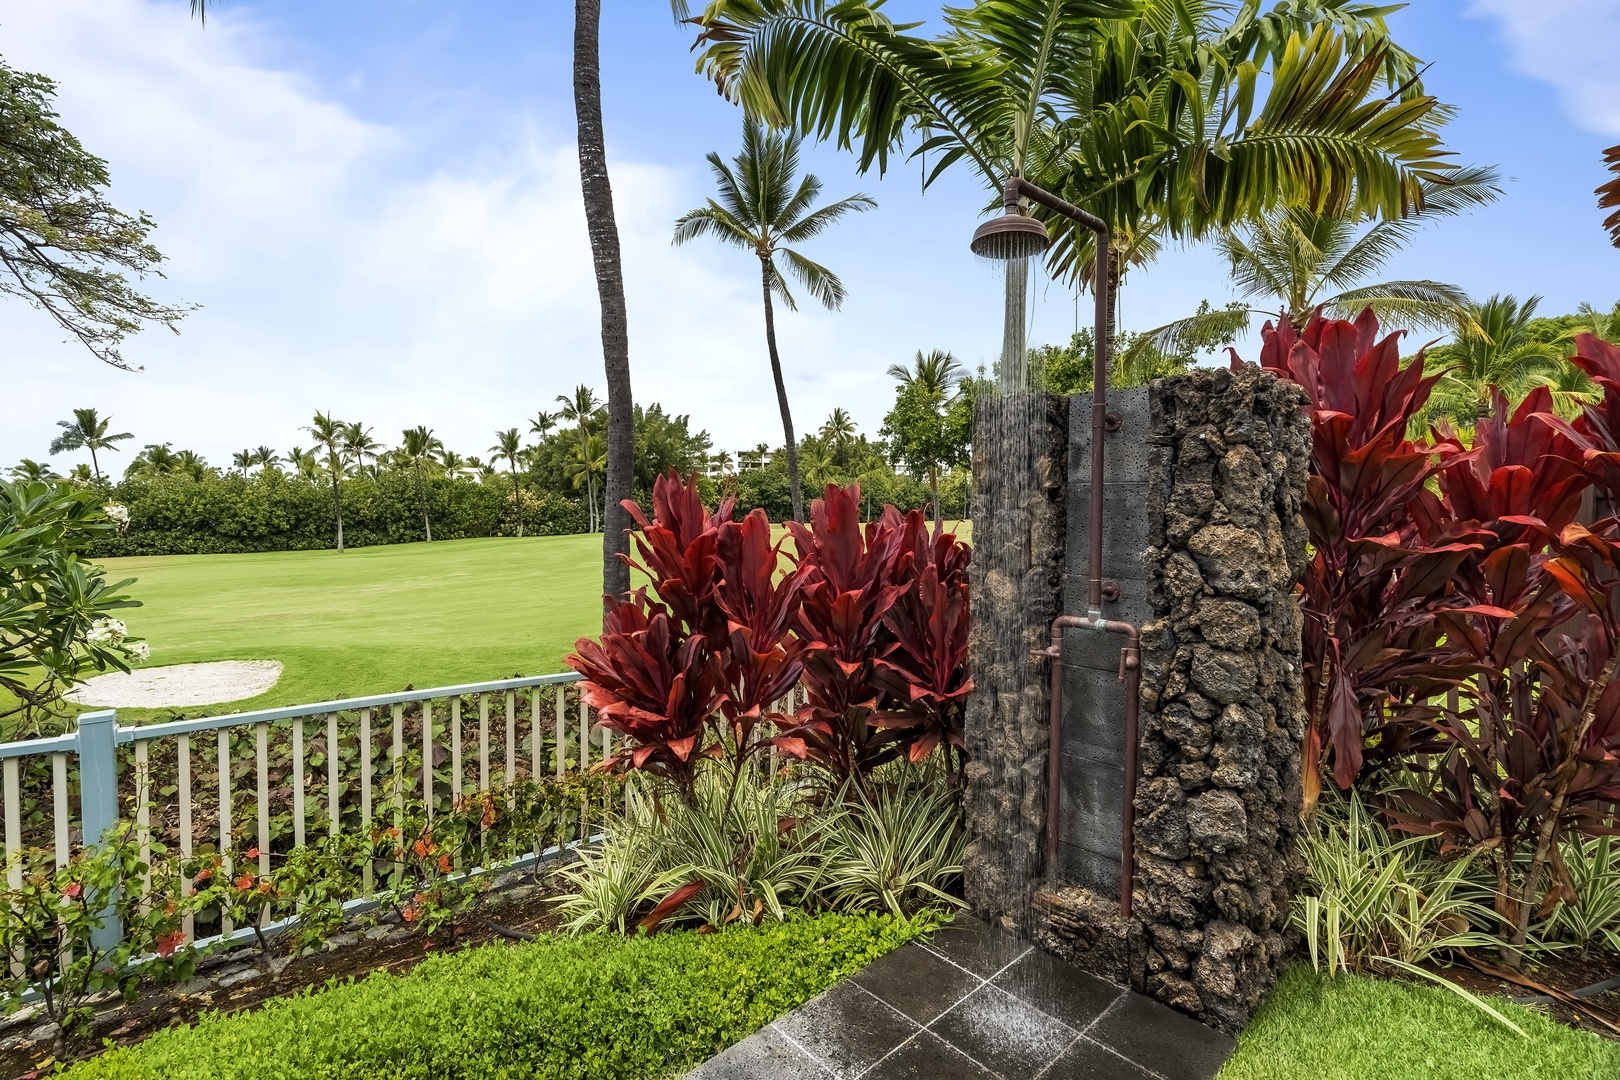 Kailua Kona Vacation Rentals, Holua Kai #27 - Outdoor shower for a nice rinse after the beach!